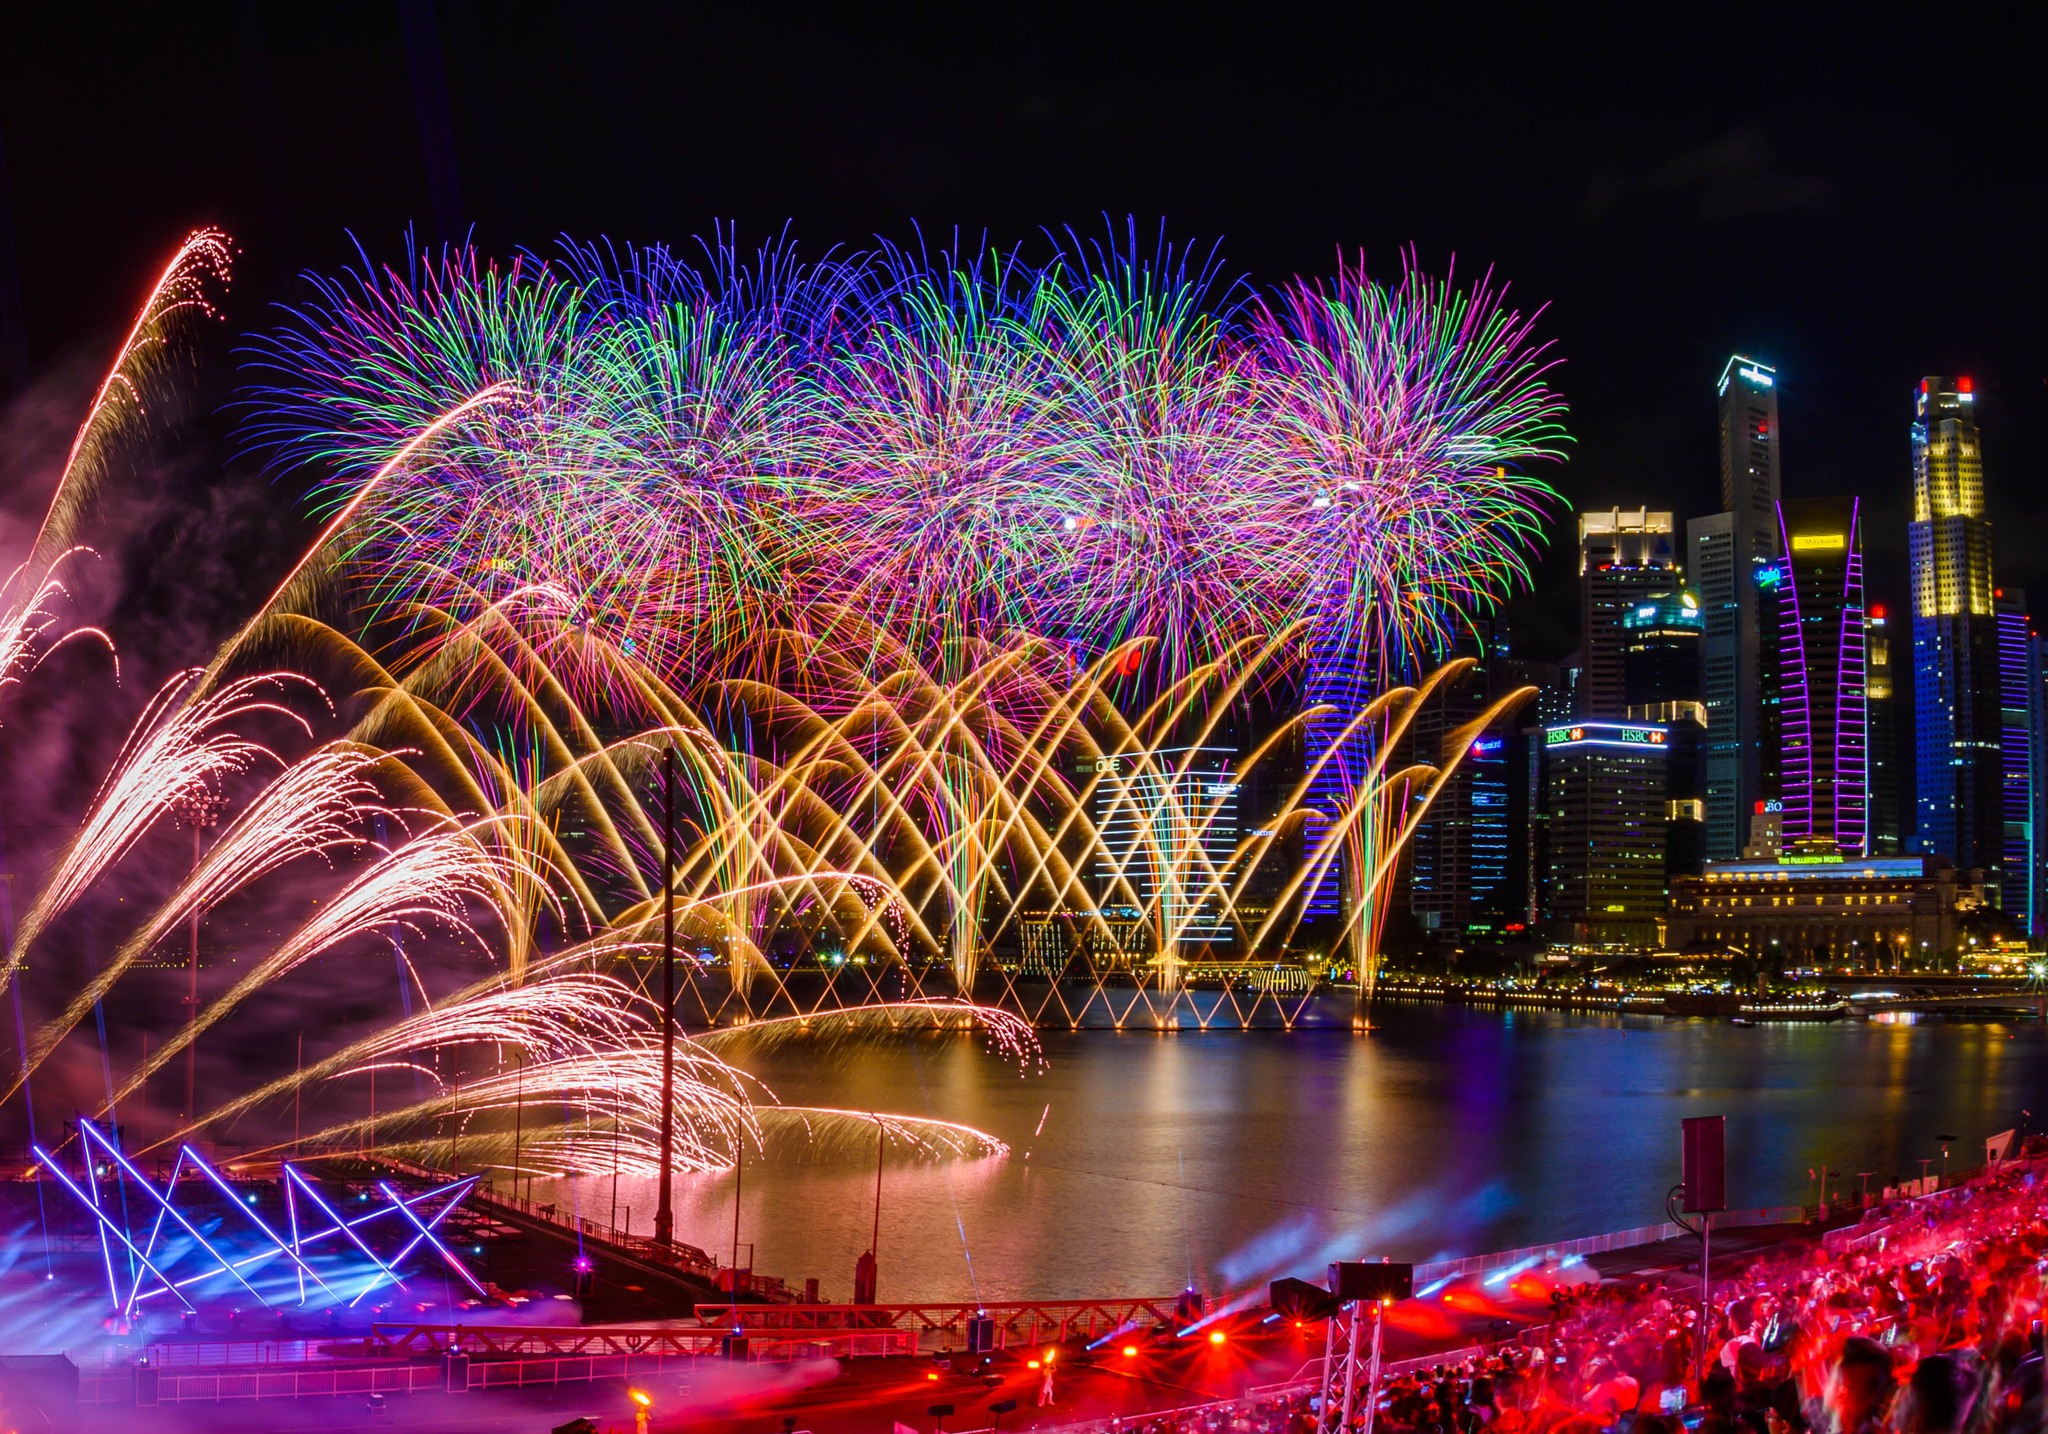 Singapore's Biggest Countdown Event Marina Bay Singapore Returns with